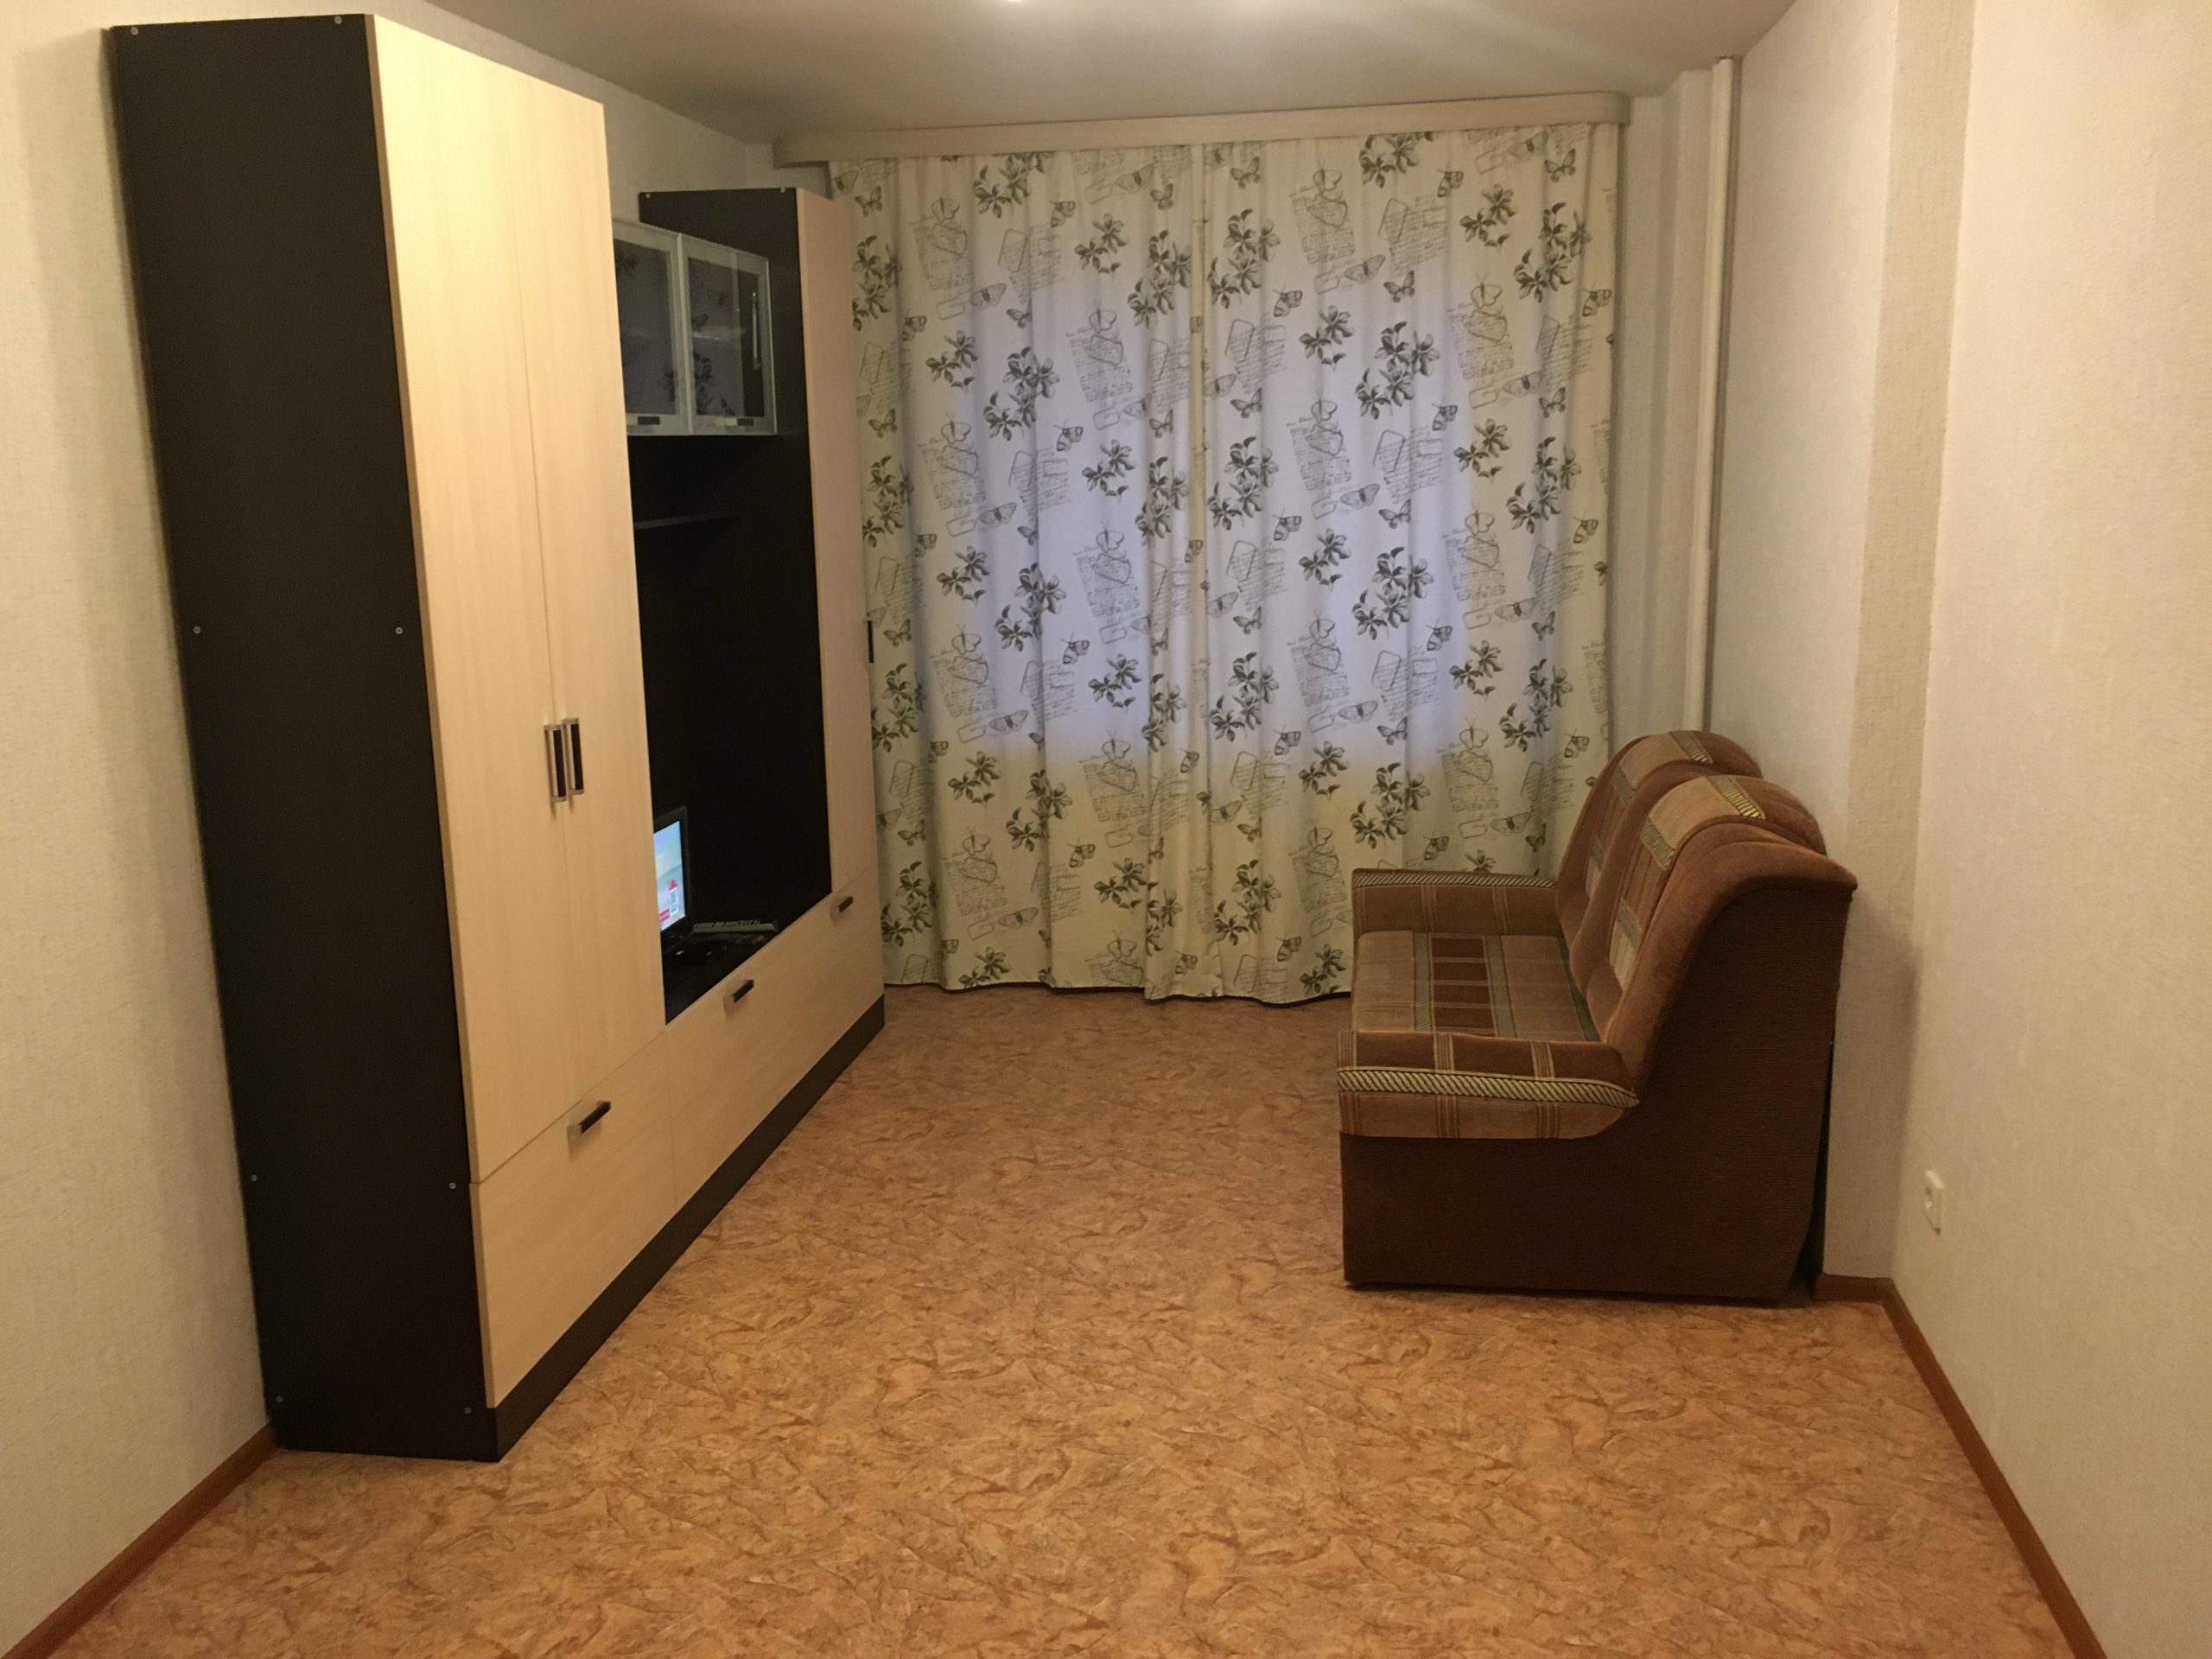 Двухкомнатная квартира на ул. Героев хасана 11б (55кв.м) до 5 гостей